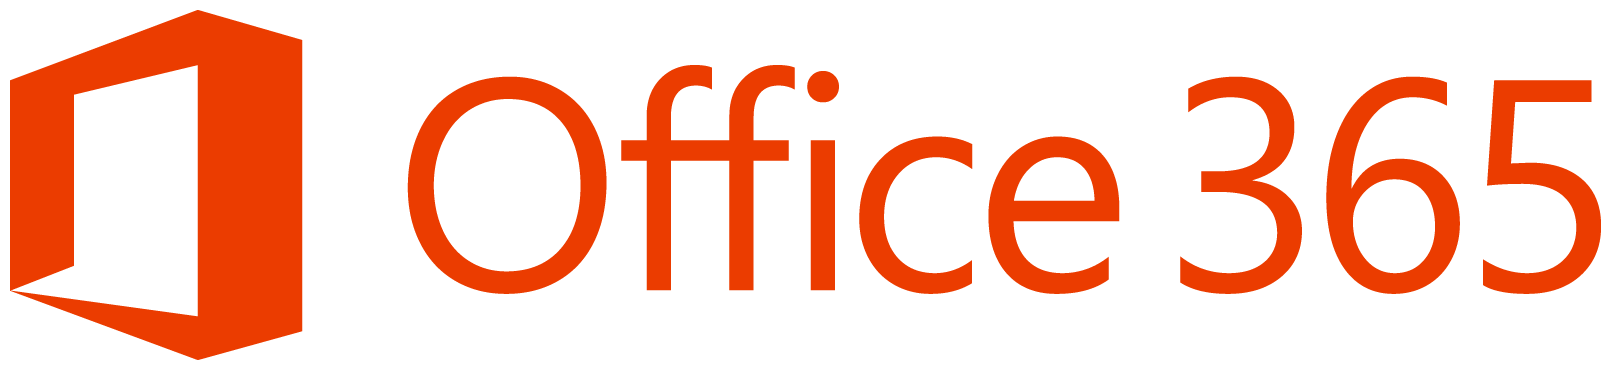 Microsoft.com Office 365 Logo - File:Office 365 logo.png - Wikimedia Commons